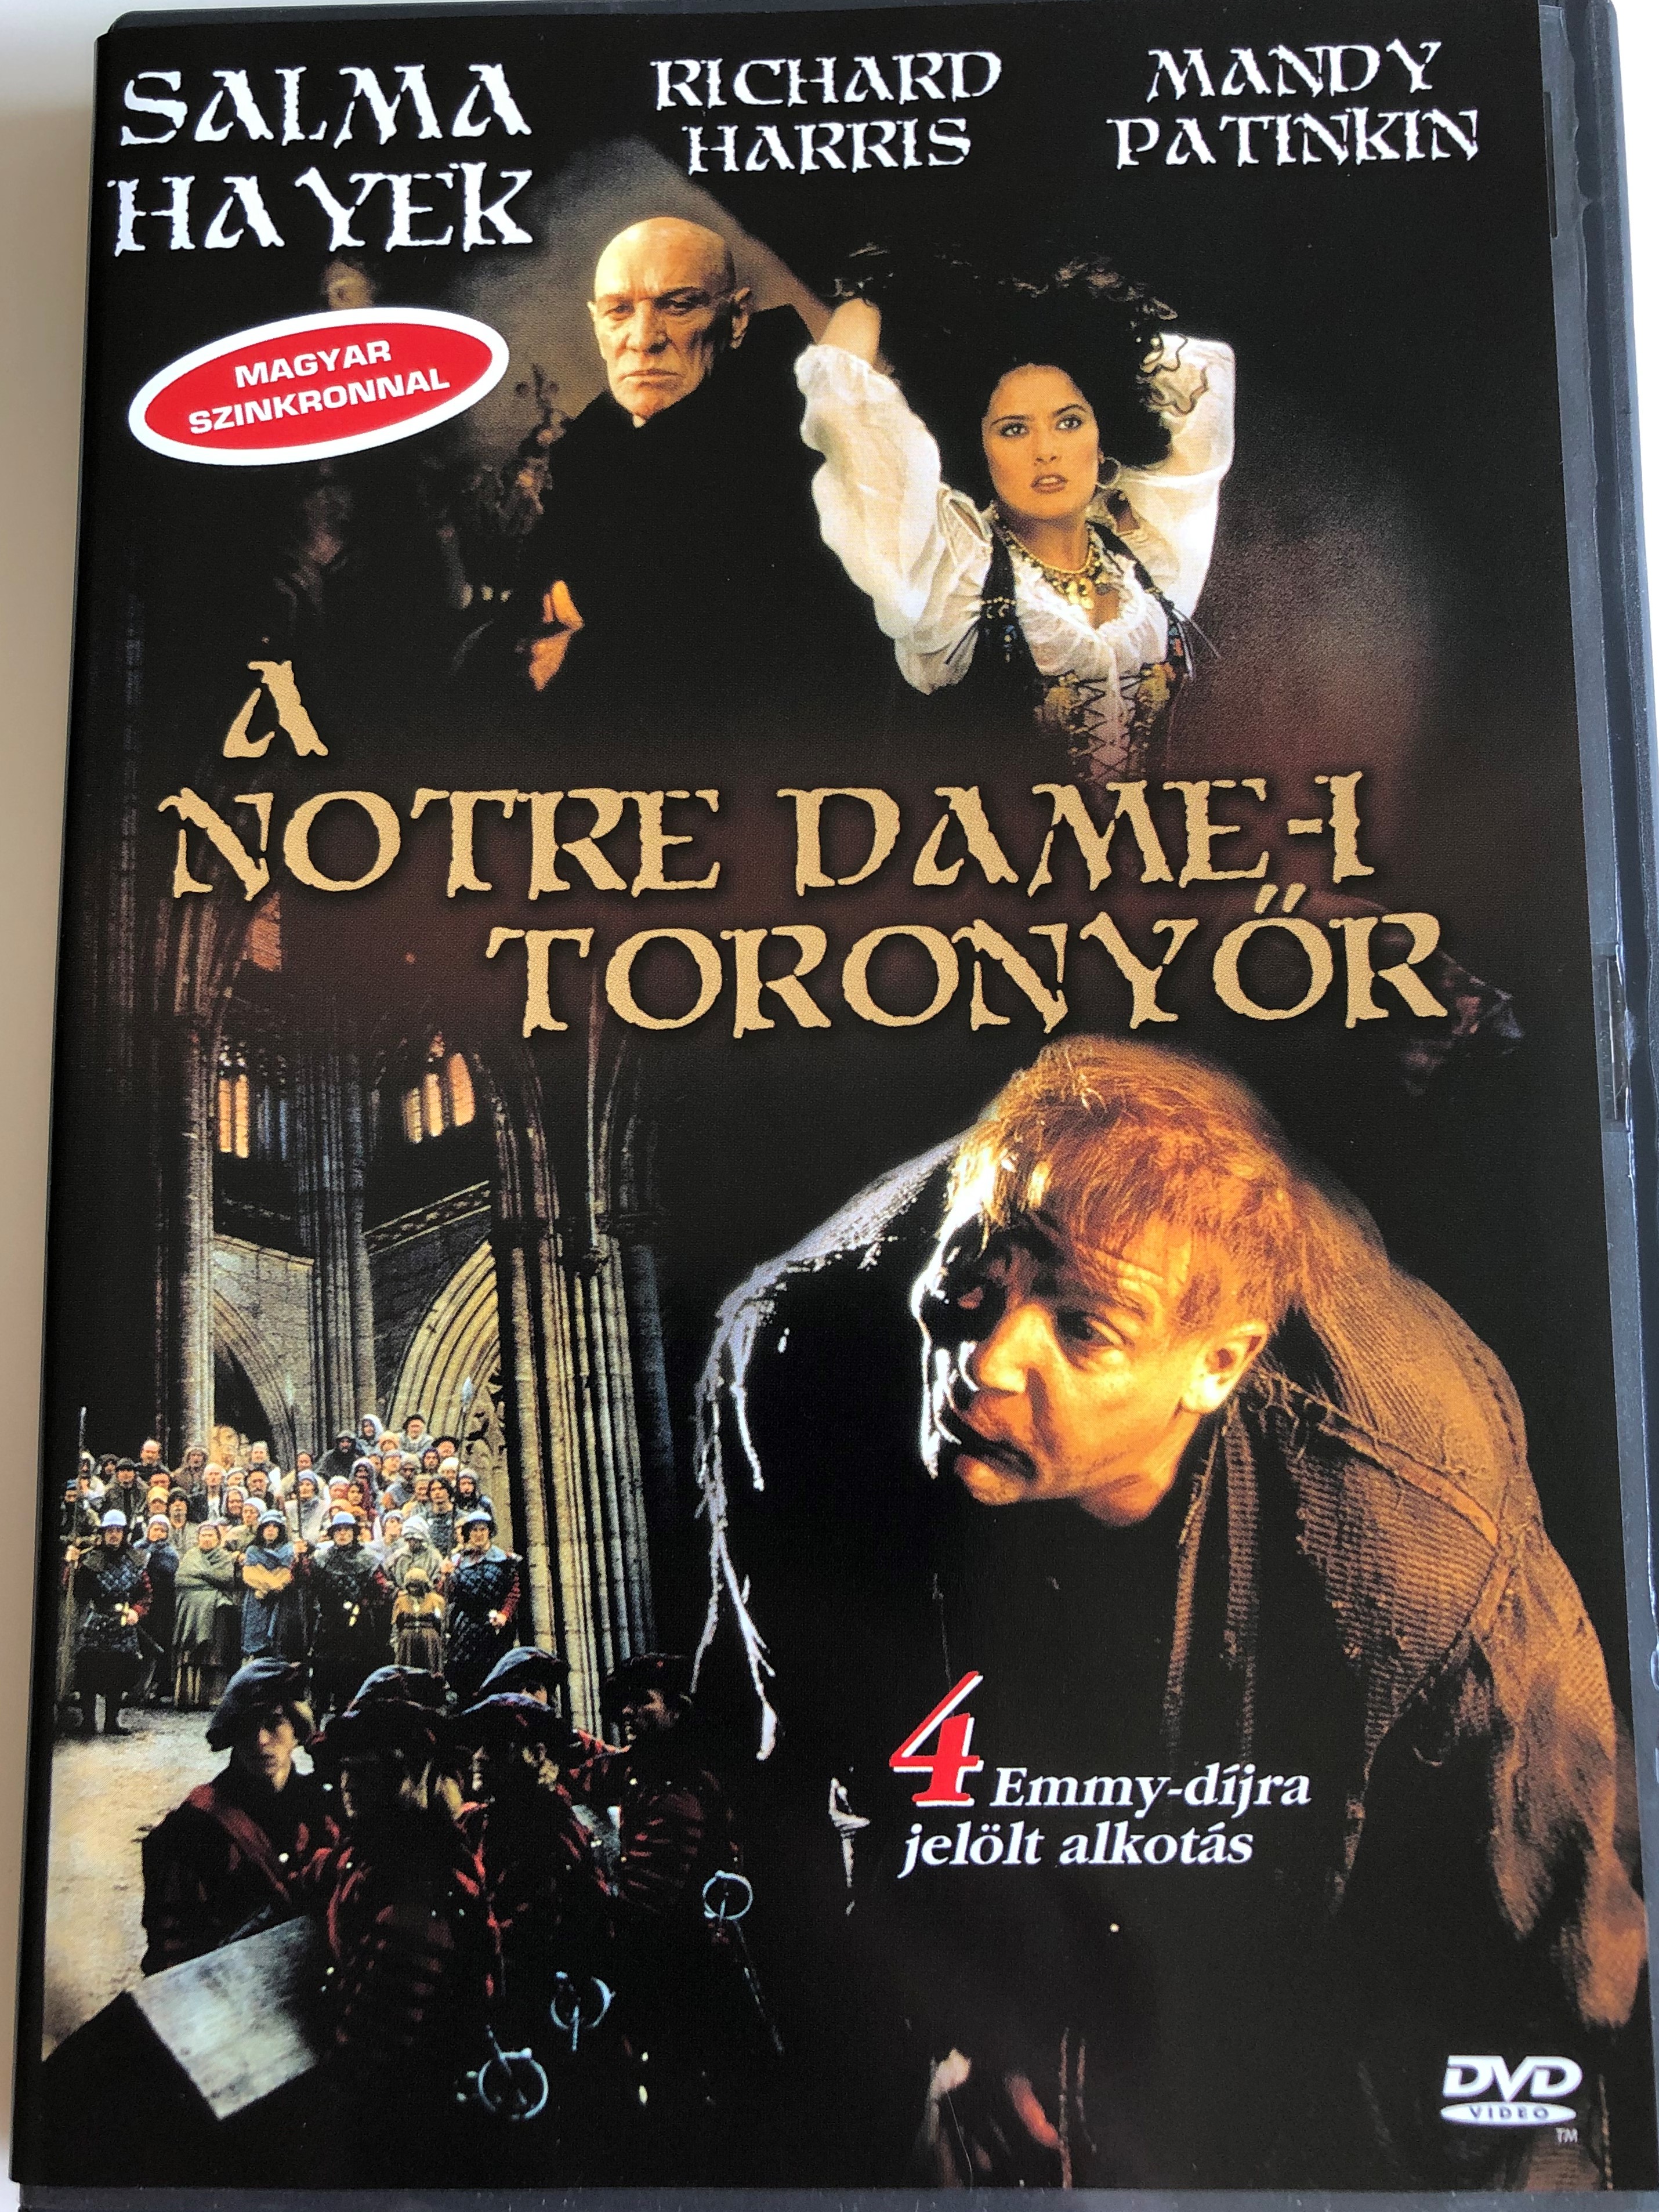 the-hunchback-dvd-1997-a-notre-dame-i-torony-r-directed-by-peter-medak-starring-mandy-patinkin-salma-hayek-richard-harris-4-emmy-award-nominations-1-.jpg